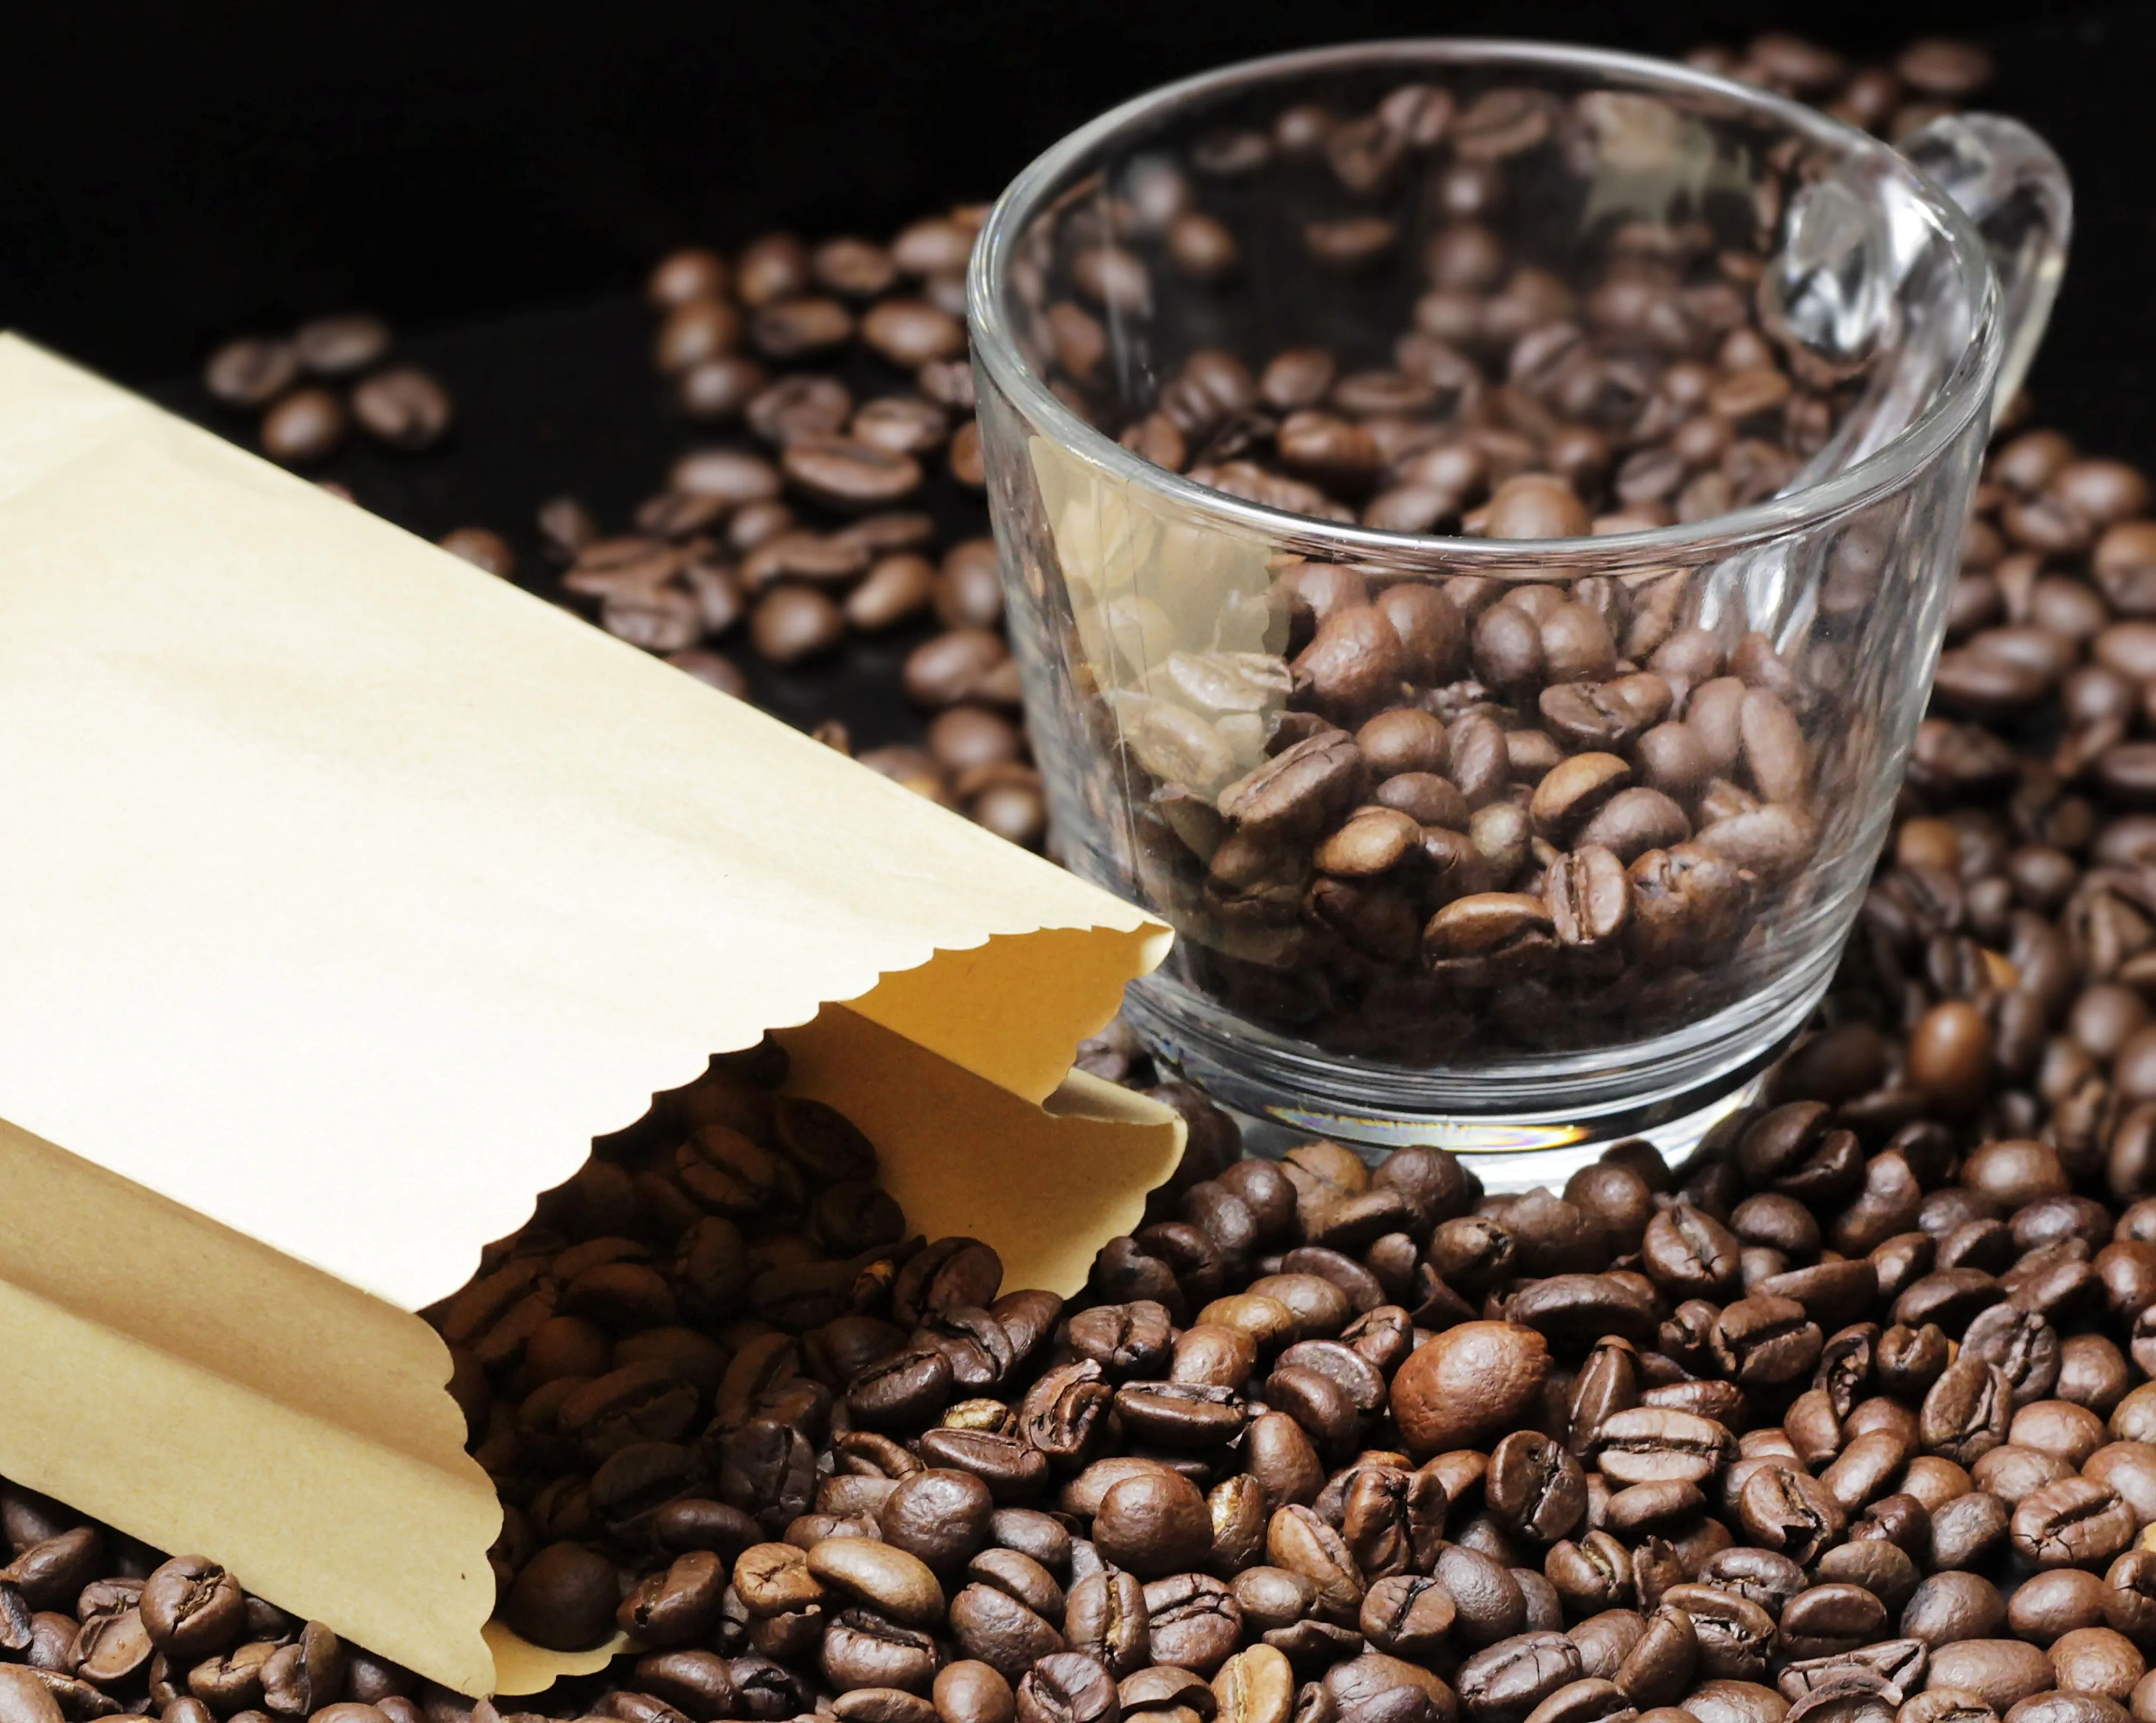 5 Ways to Enjoy Decaf Coffee from KoffiePiraat